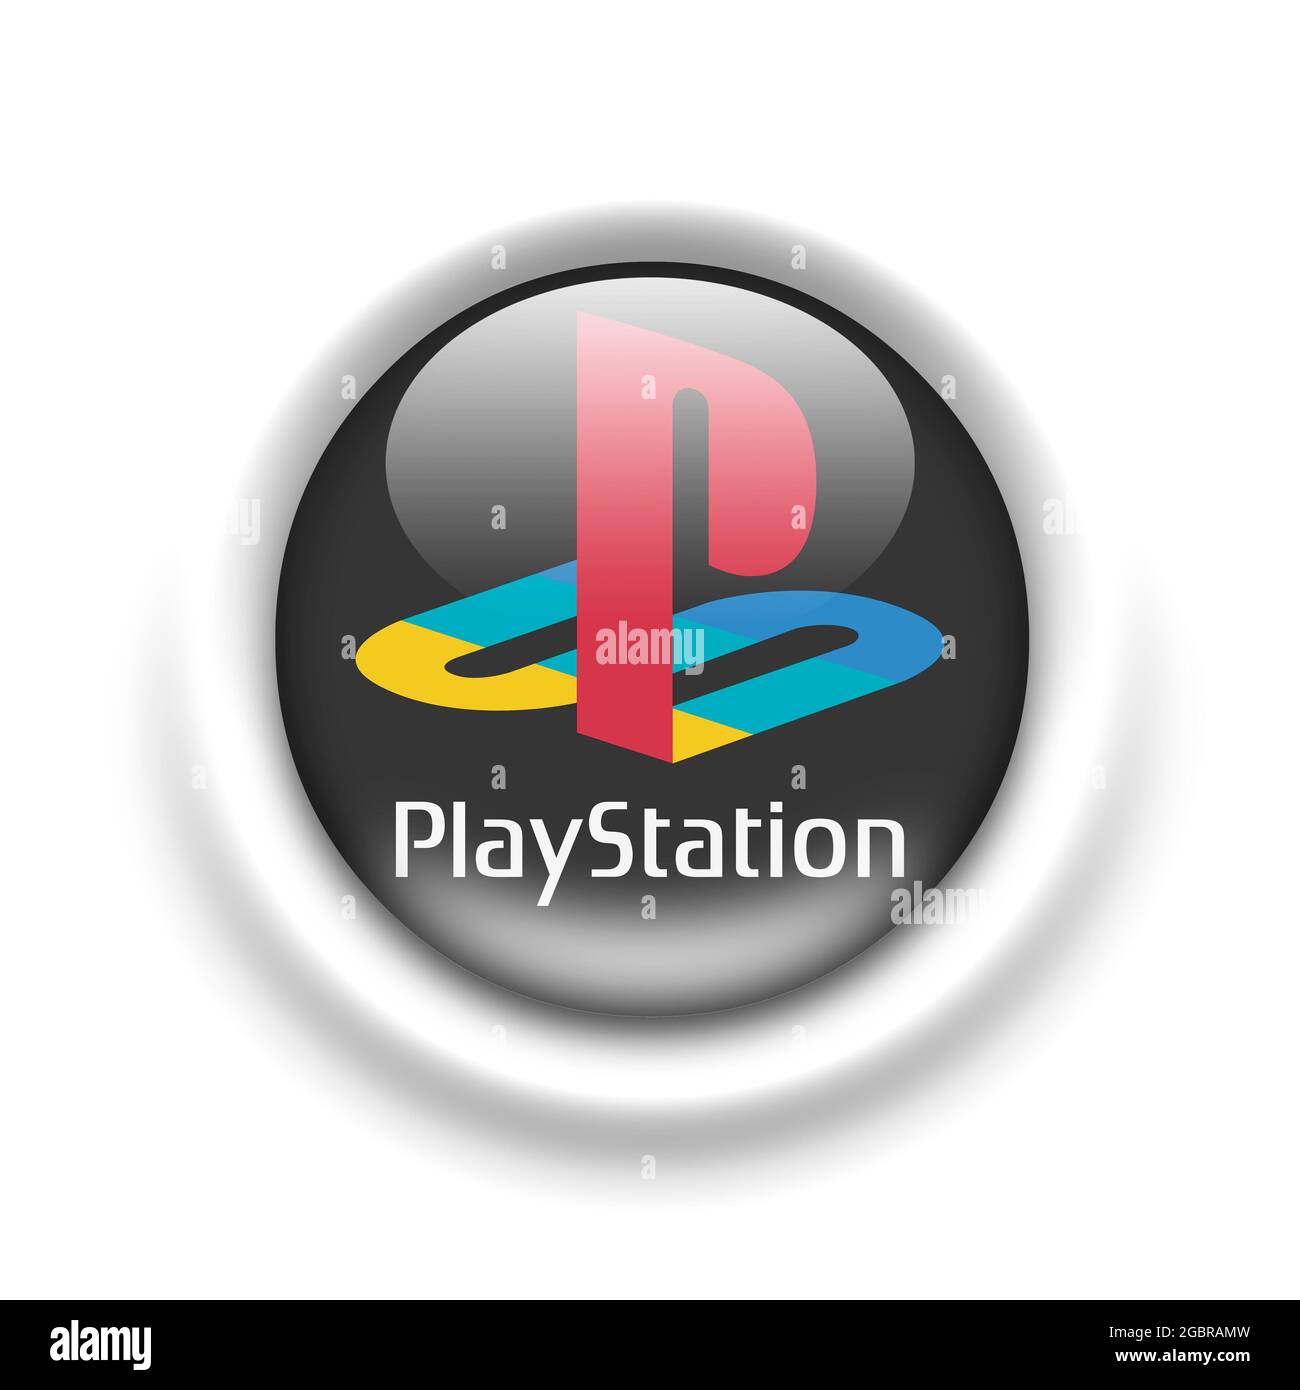 Play Station logo Stock Photo - Alamy